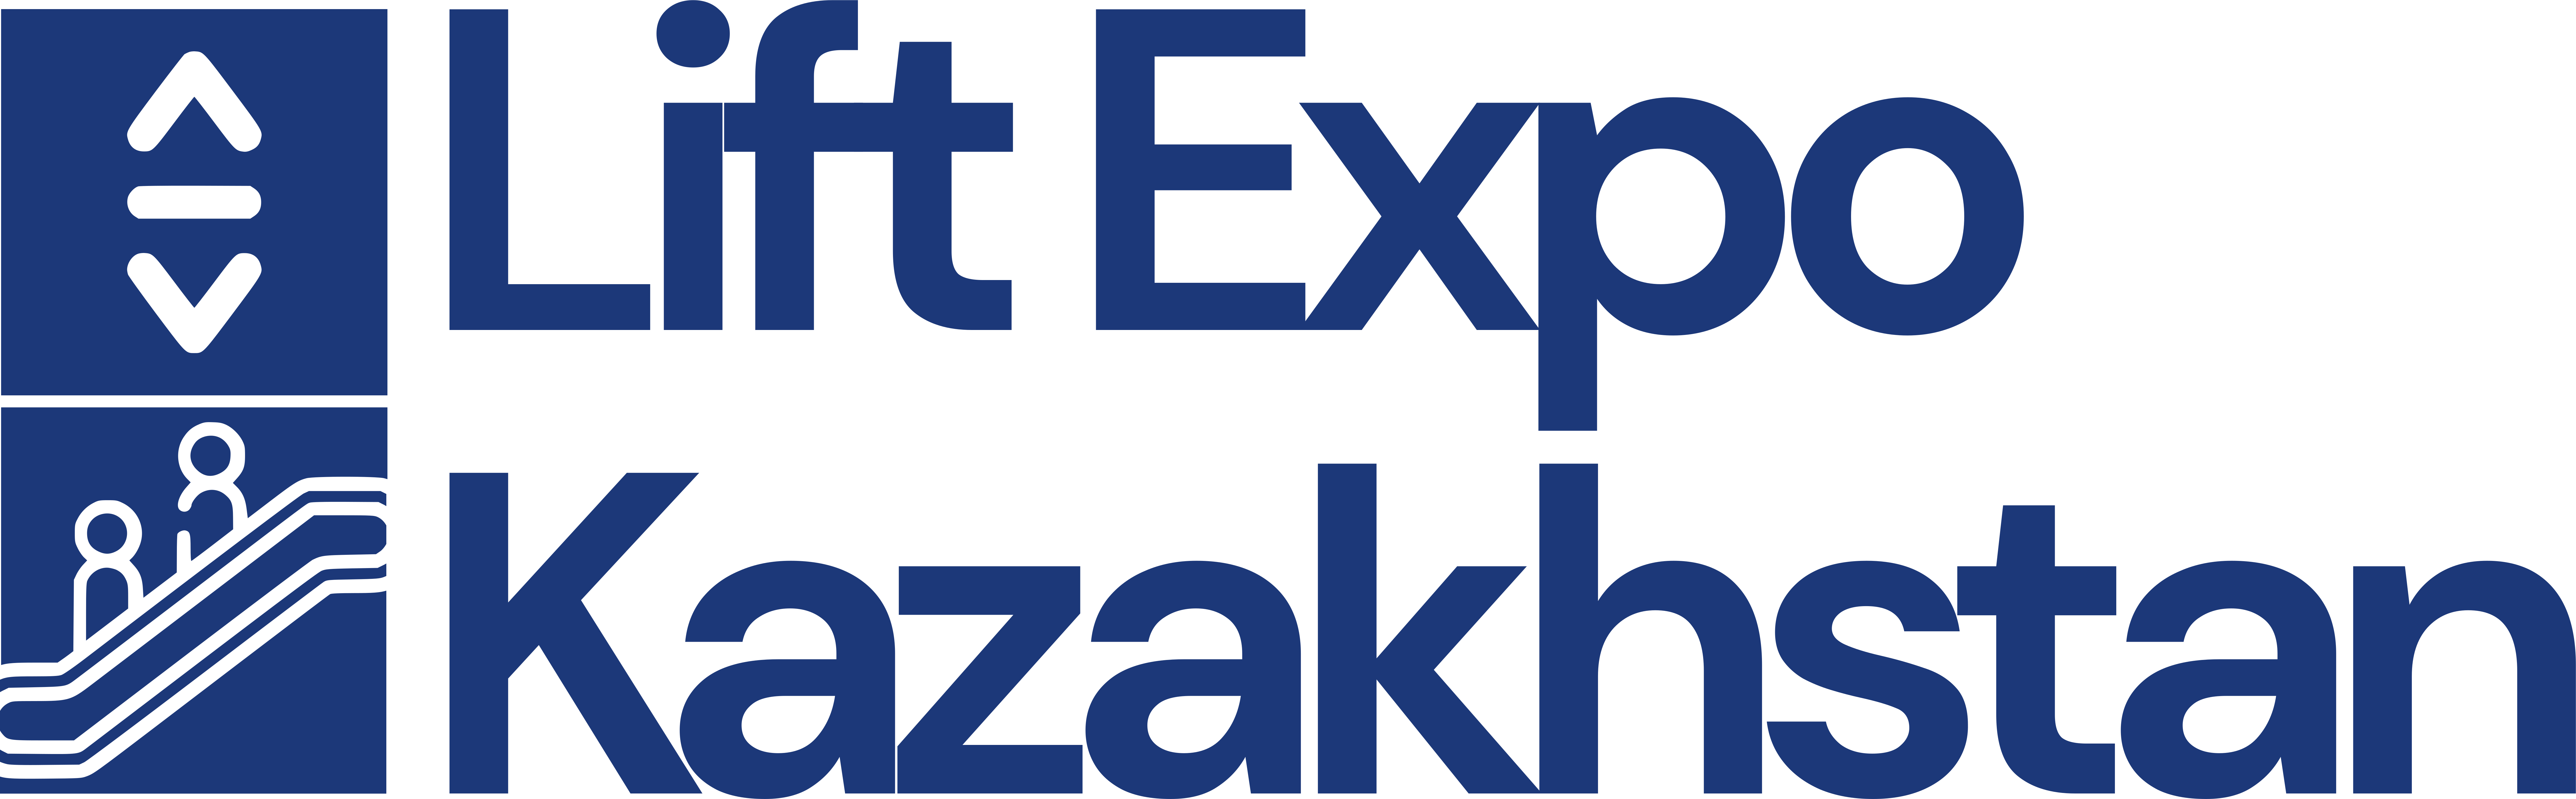 kazakistan-logo